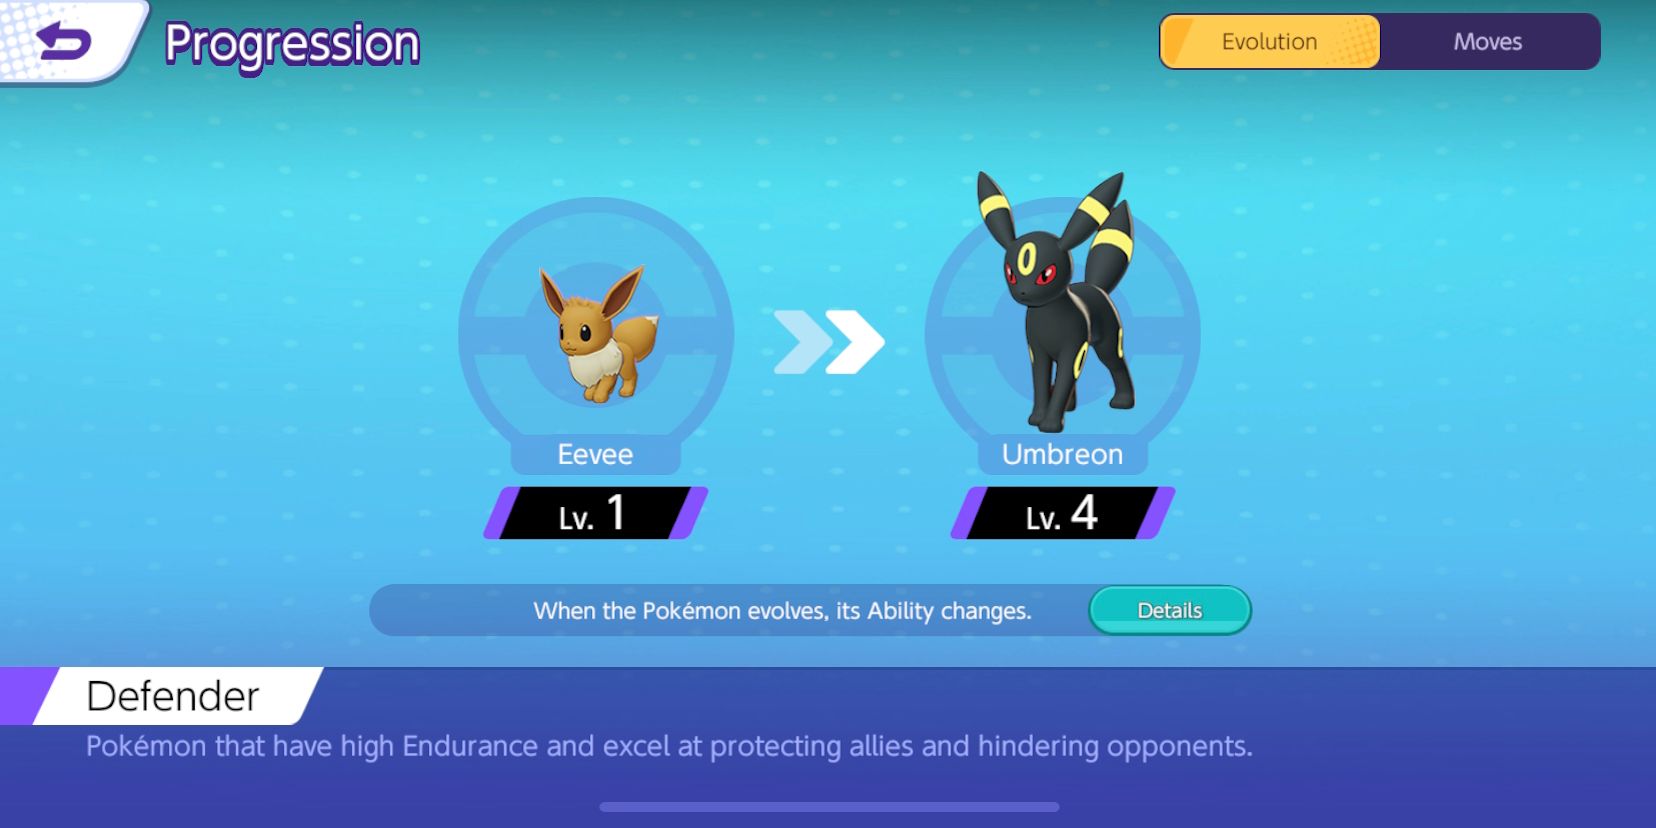 Pokemon Unite's Umbreon progress screen showing levels evolved from Eevee